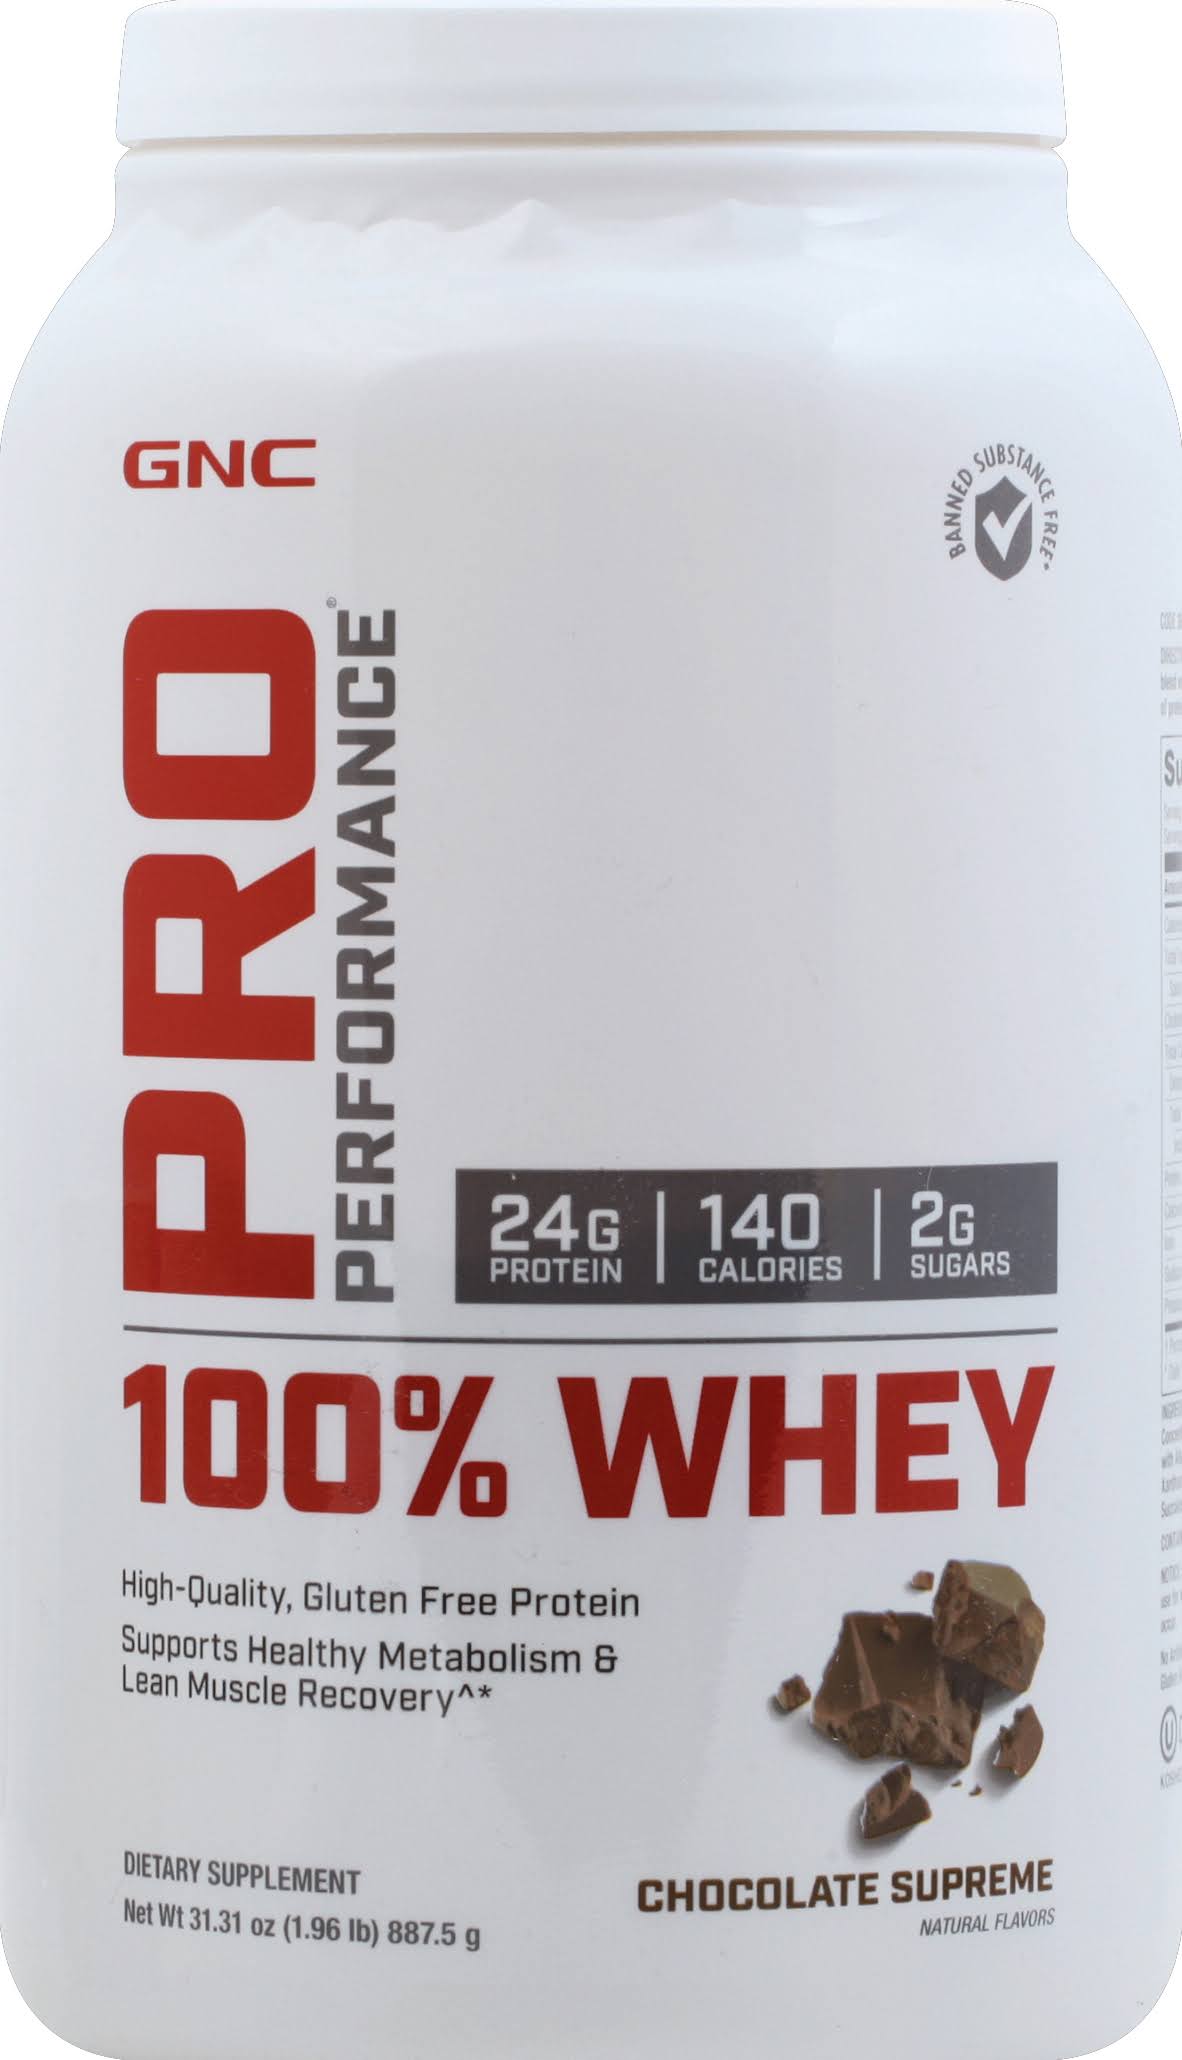 GNC Pro Performance 100 Percent Whey Dietary Supplement - Chocolate Supreme, 0.9kg